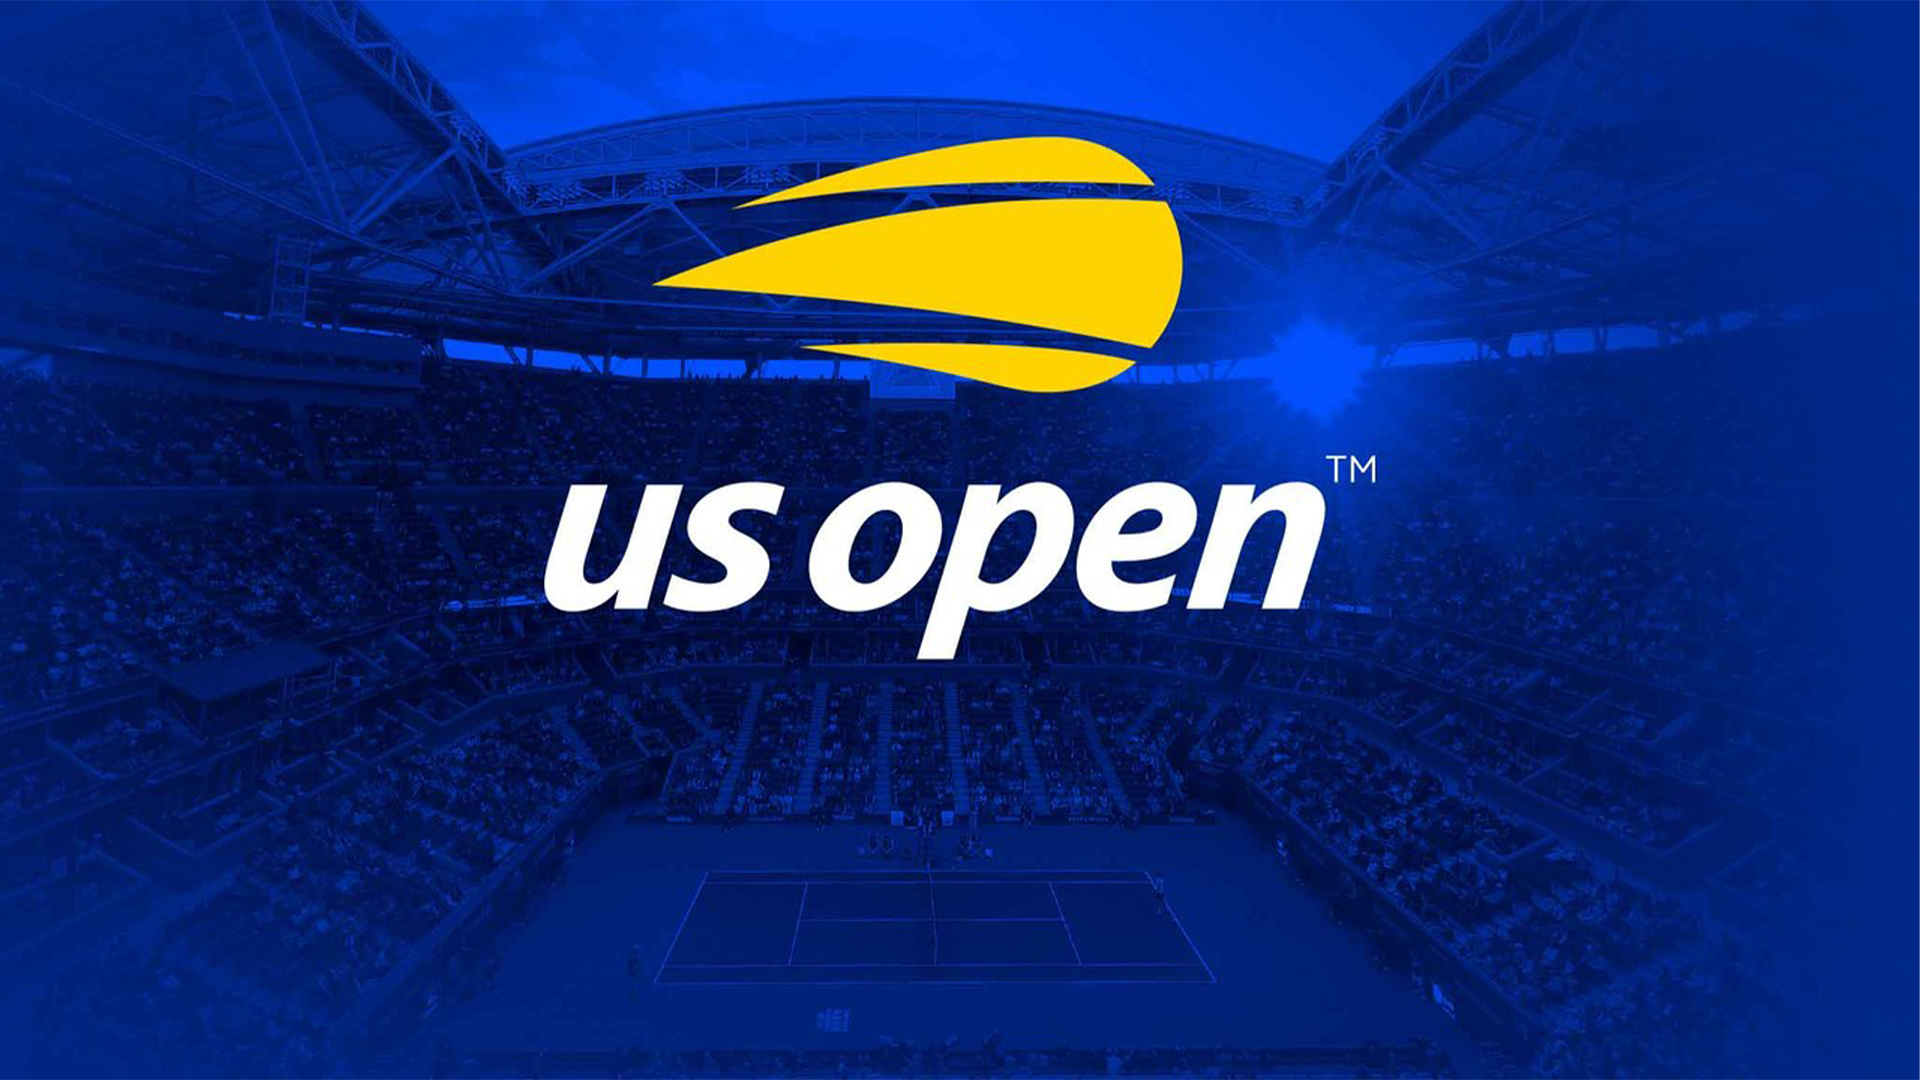 US Open Tennis on Nine Nine for Brands